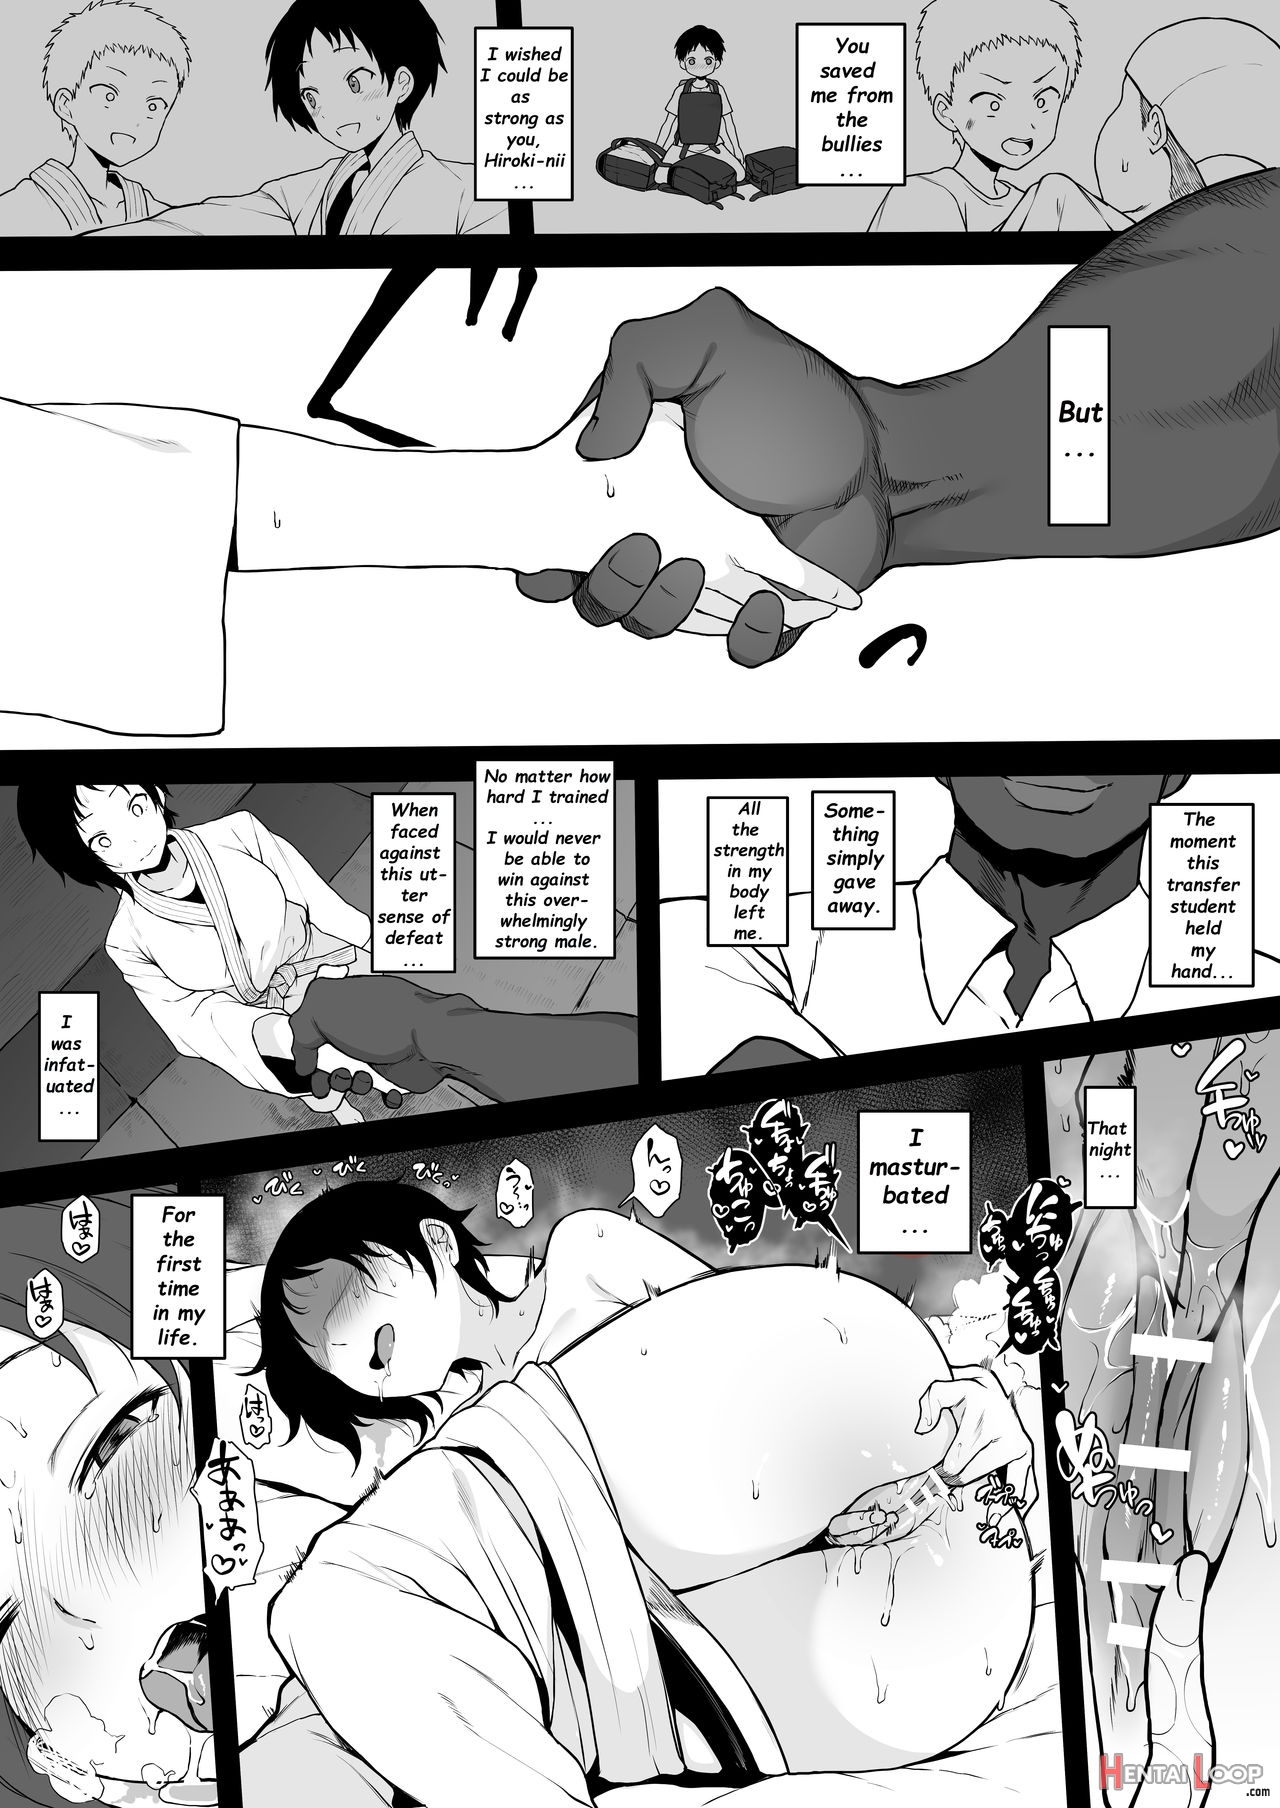 Kokujin No Tenkousei Ntr Ru Chapters 1-6 Part 1 Plus Bonus Chapter: Stolen Mother’s Breasts page 51